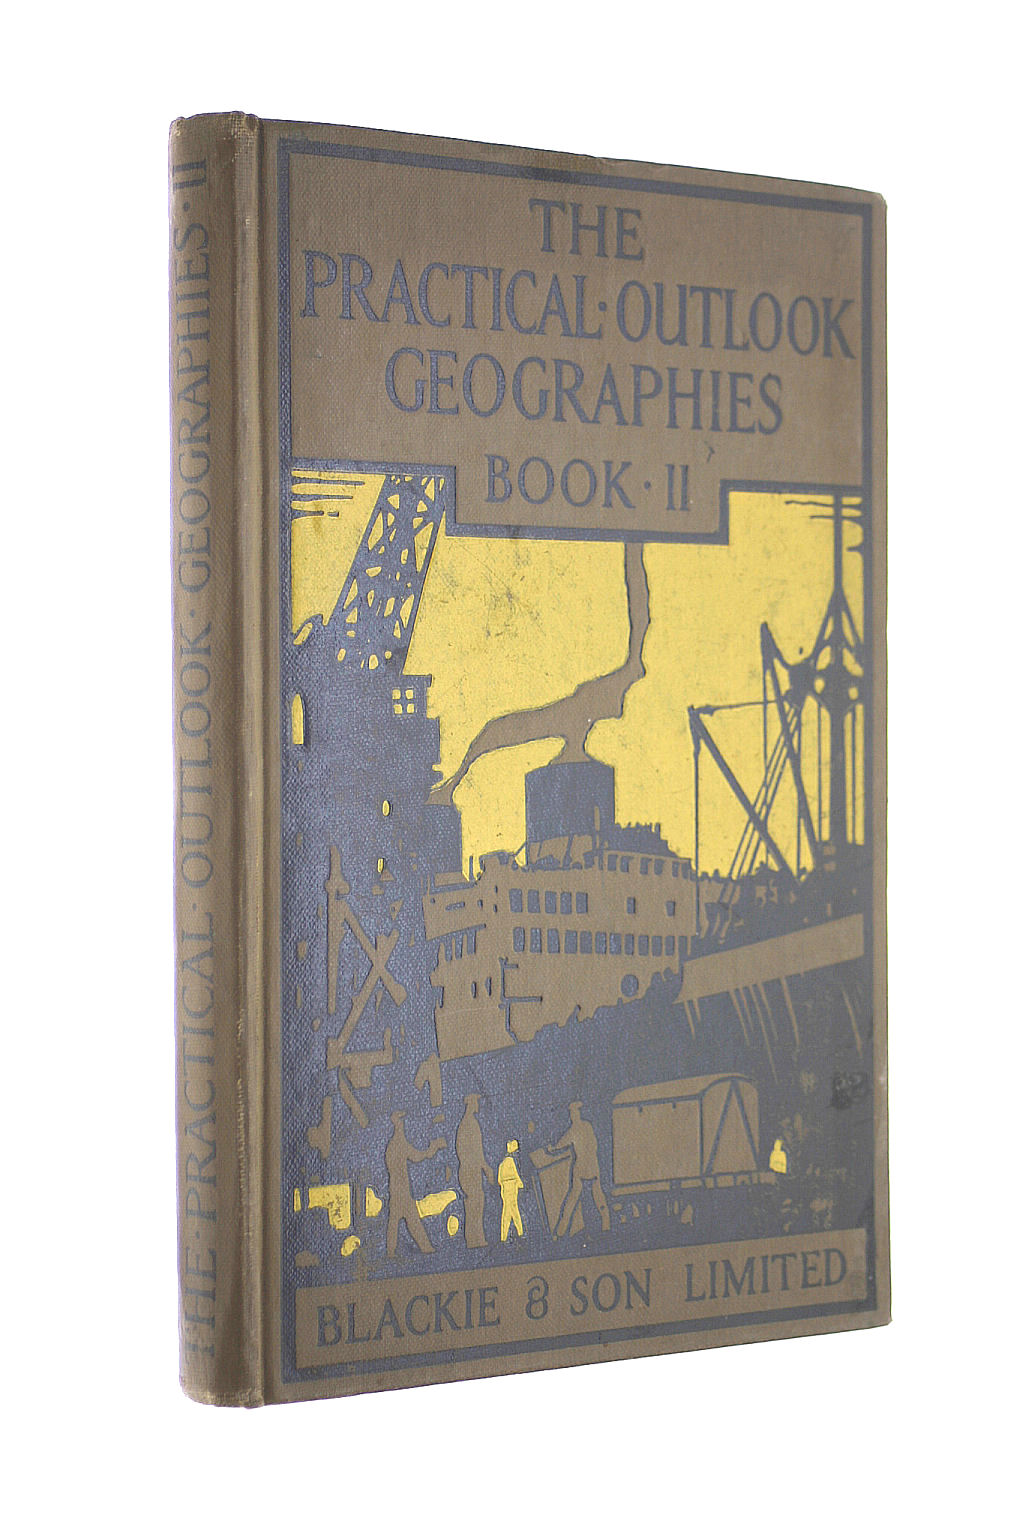 GEORGE THOMLINSON MACKAY - The Practical Outlook Geographies Book II Life in Strange Lands